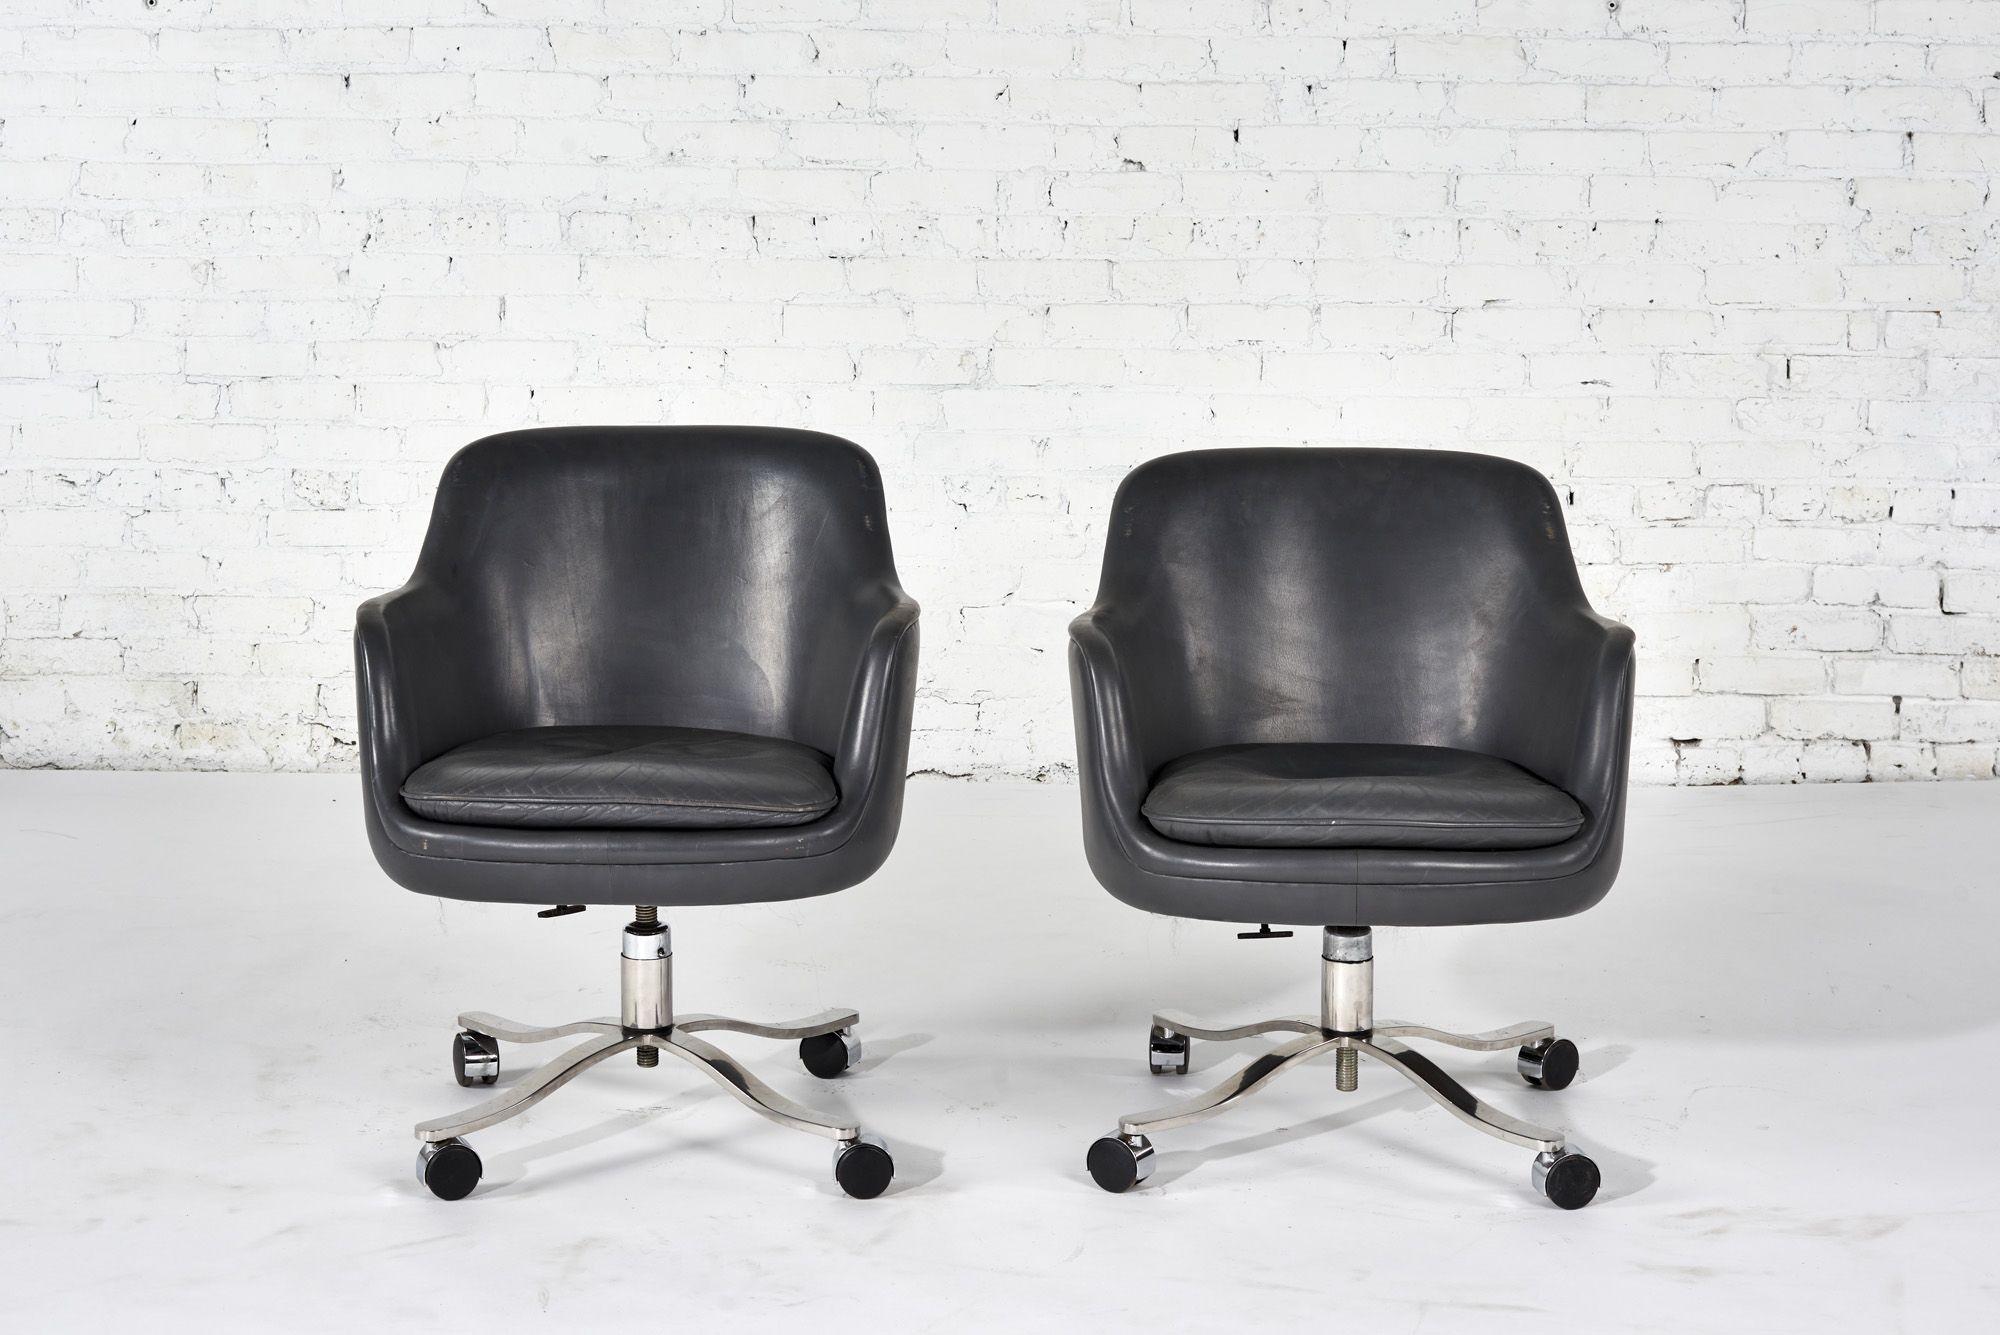 Nicos Zographos grey leather office/desk chair, 1980s. Original slate grey color leather.